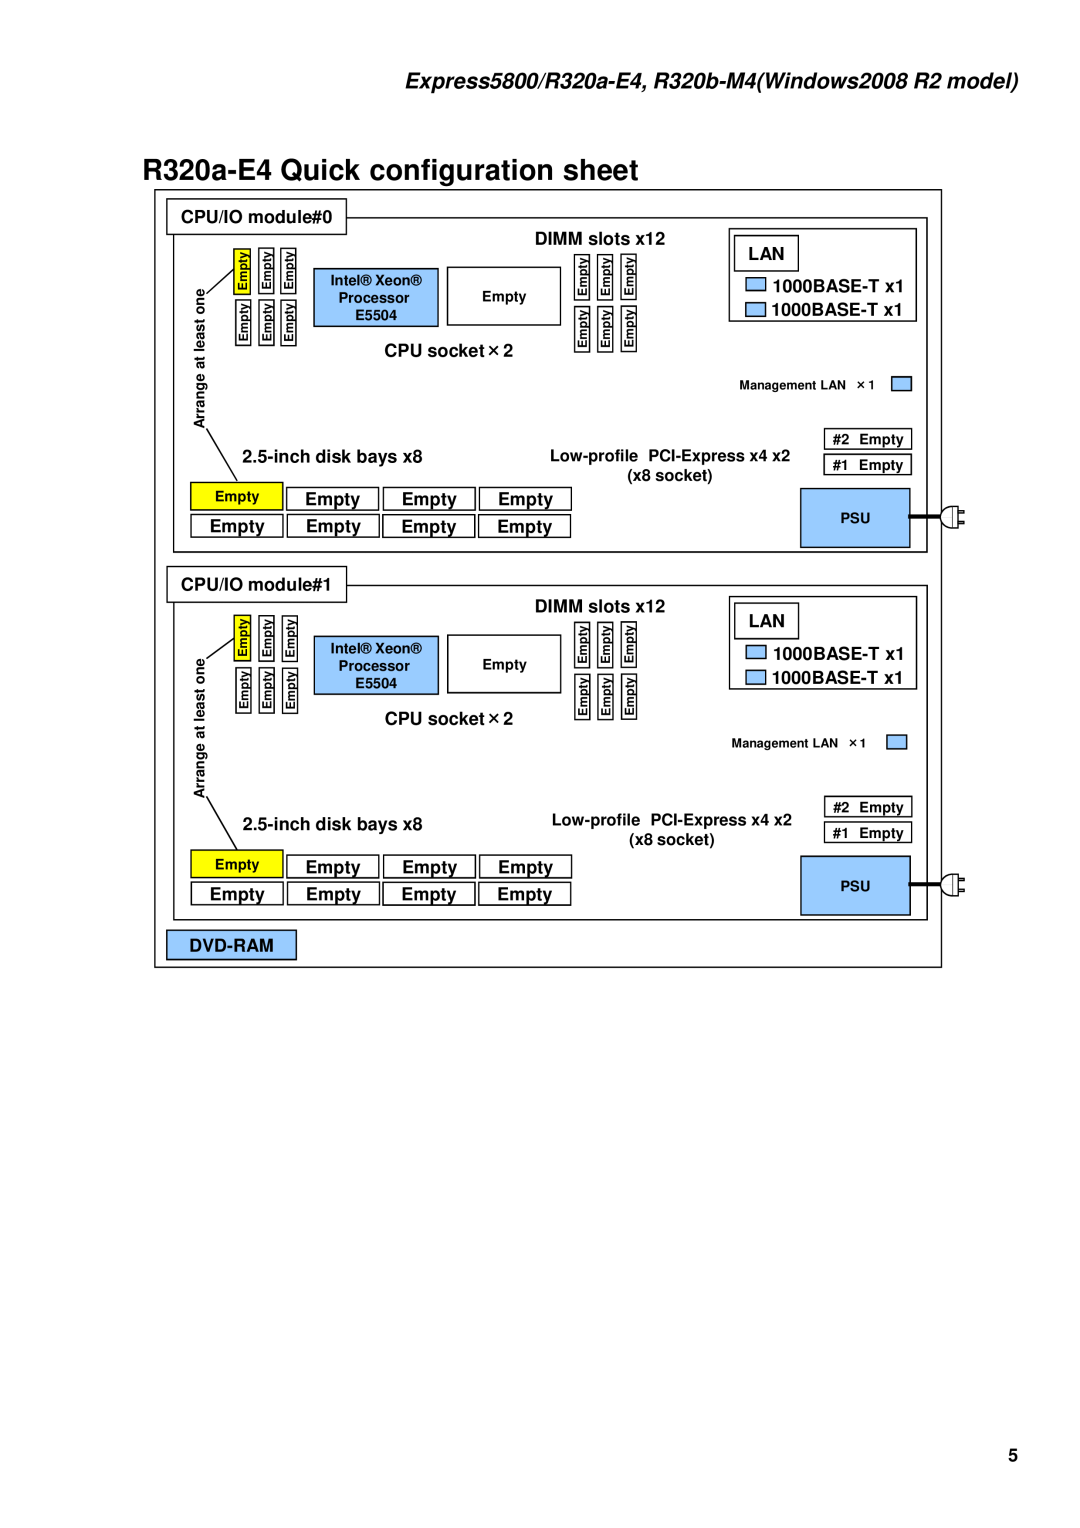 NEC R320A-E4, R320B-M4 manual R320a-E4Quick configuration sheet, Express5800/R320a-E4, R320b-M4Windows2008R2 model 